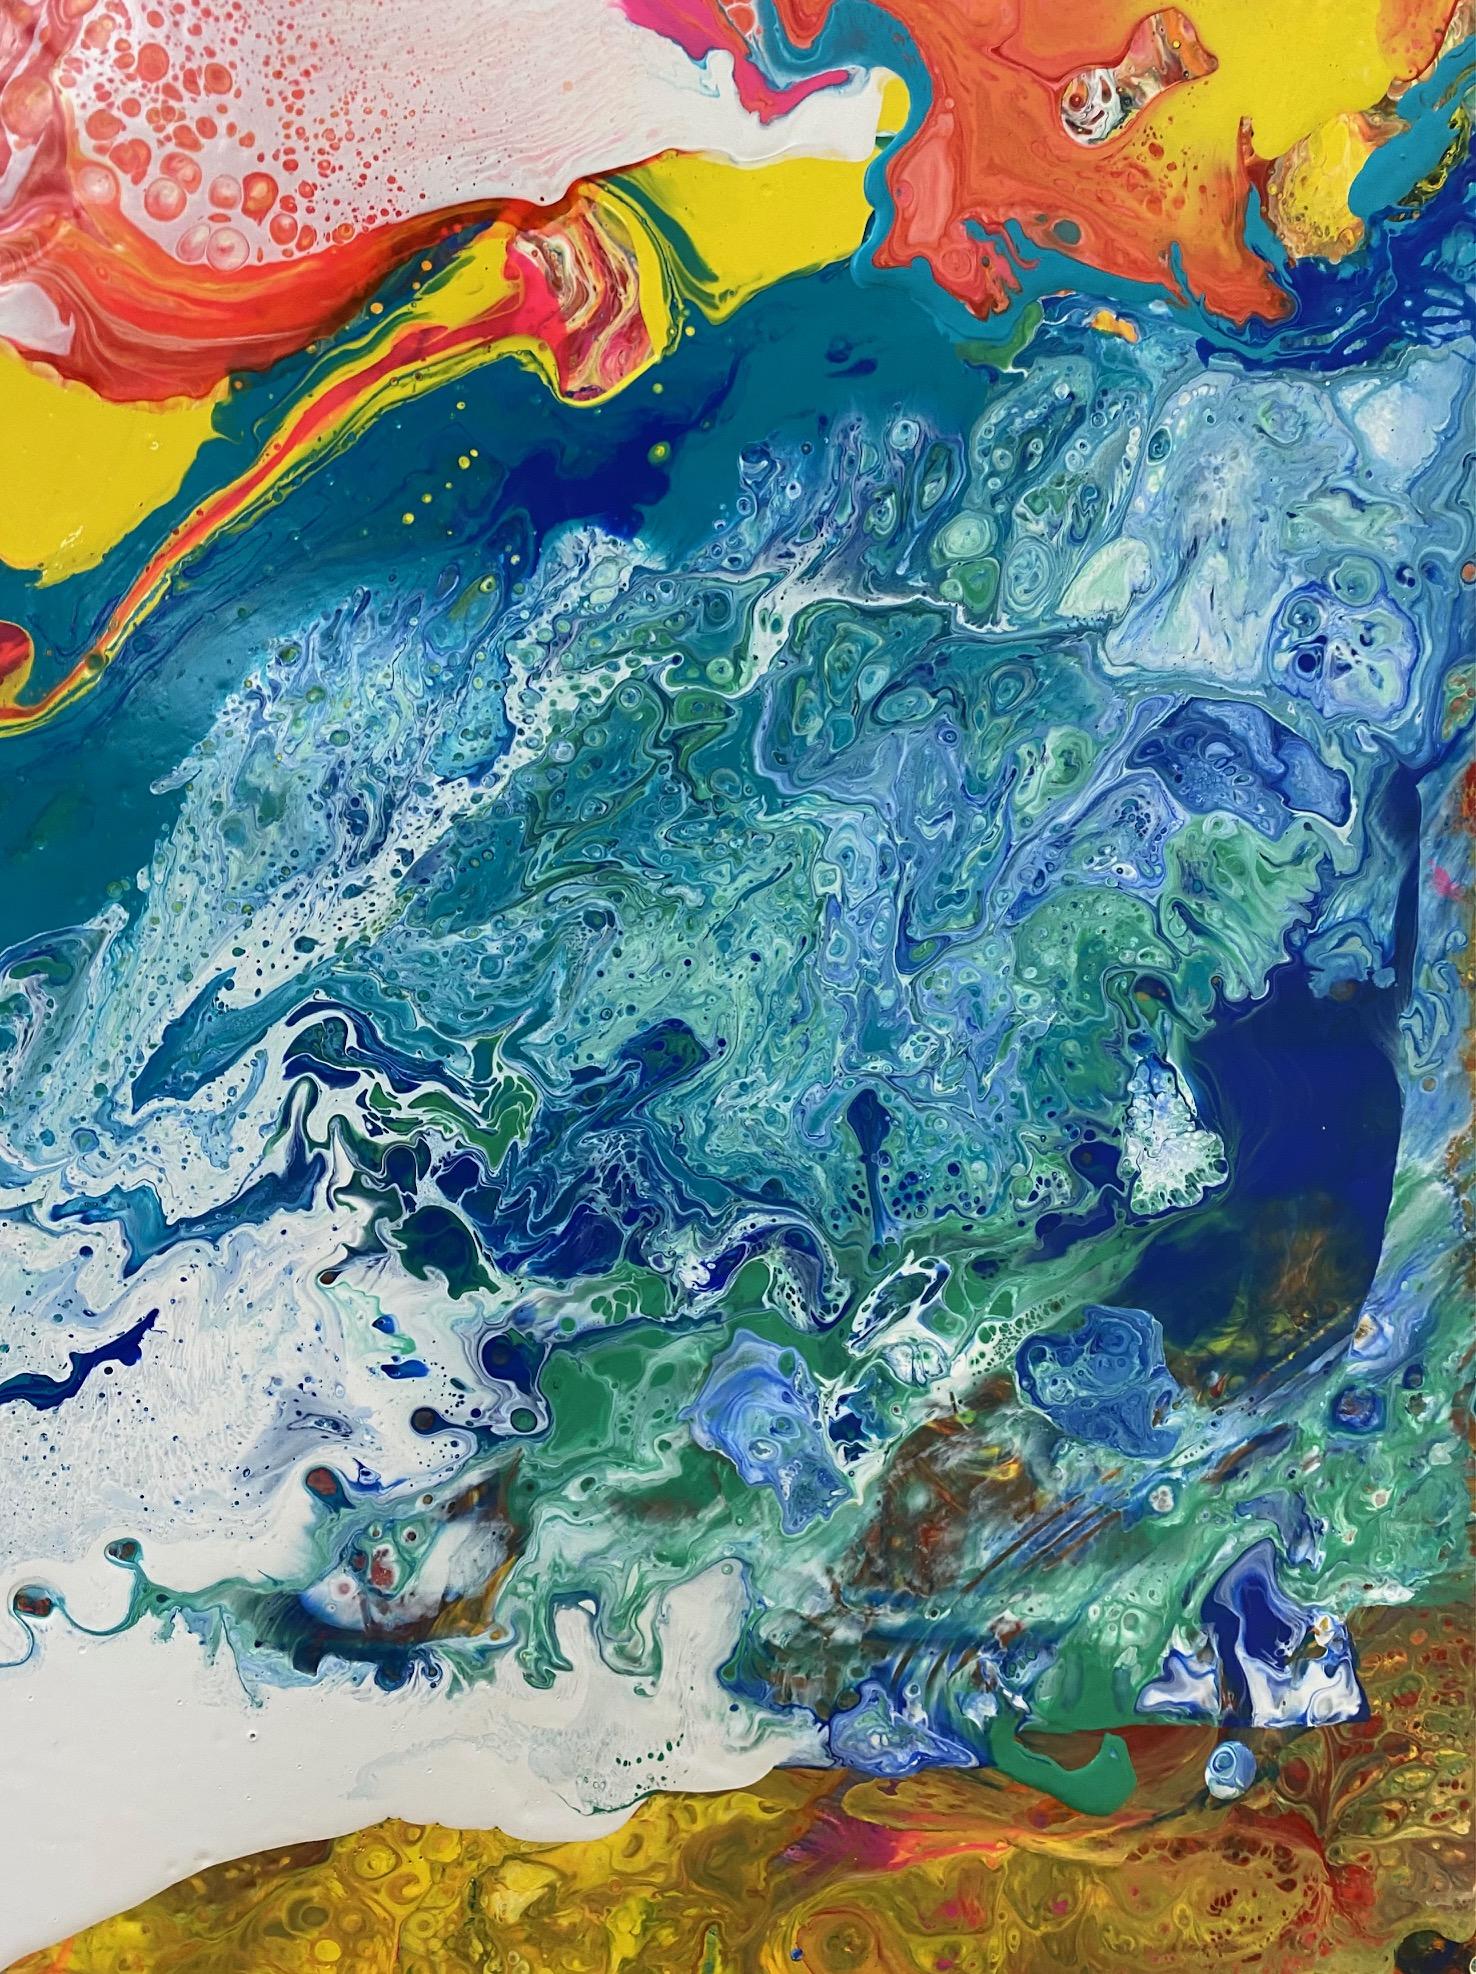 Tropical Depression, original 30x40 abstract expressionist acrylic painting - Abstract Expressionist Painting by Carol Carpenter